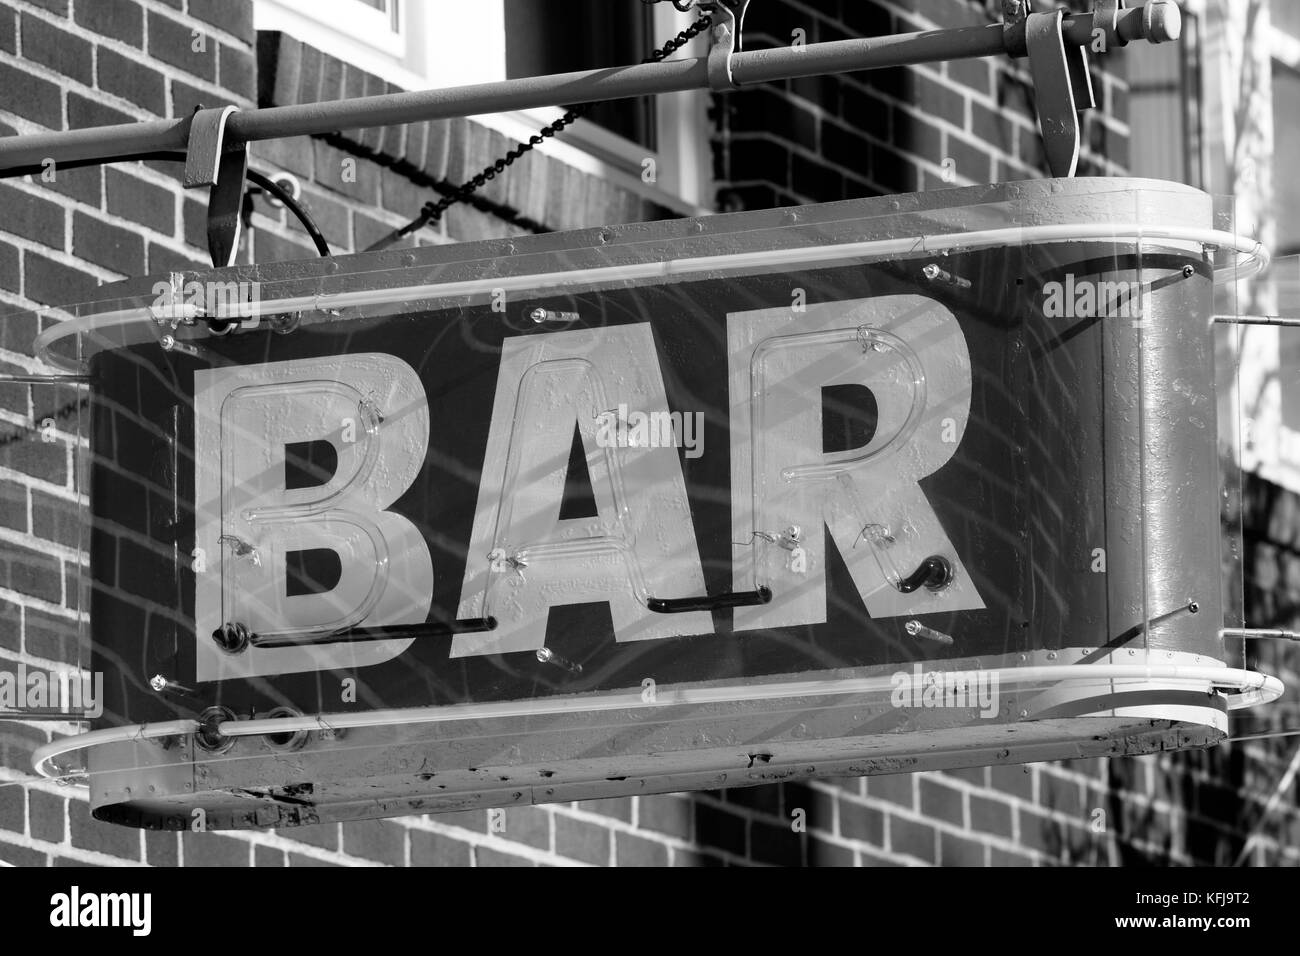 A simple, straightforward sign for a bar or pub. Stock Photo